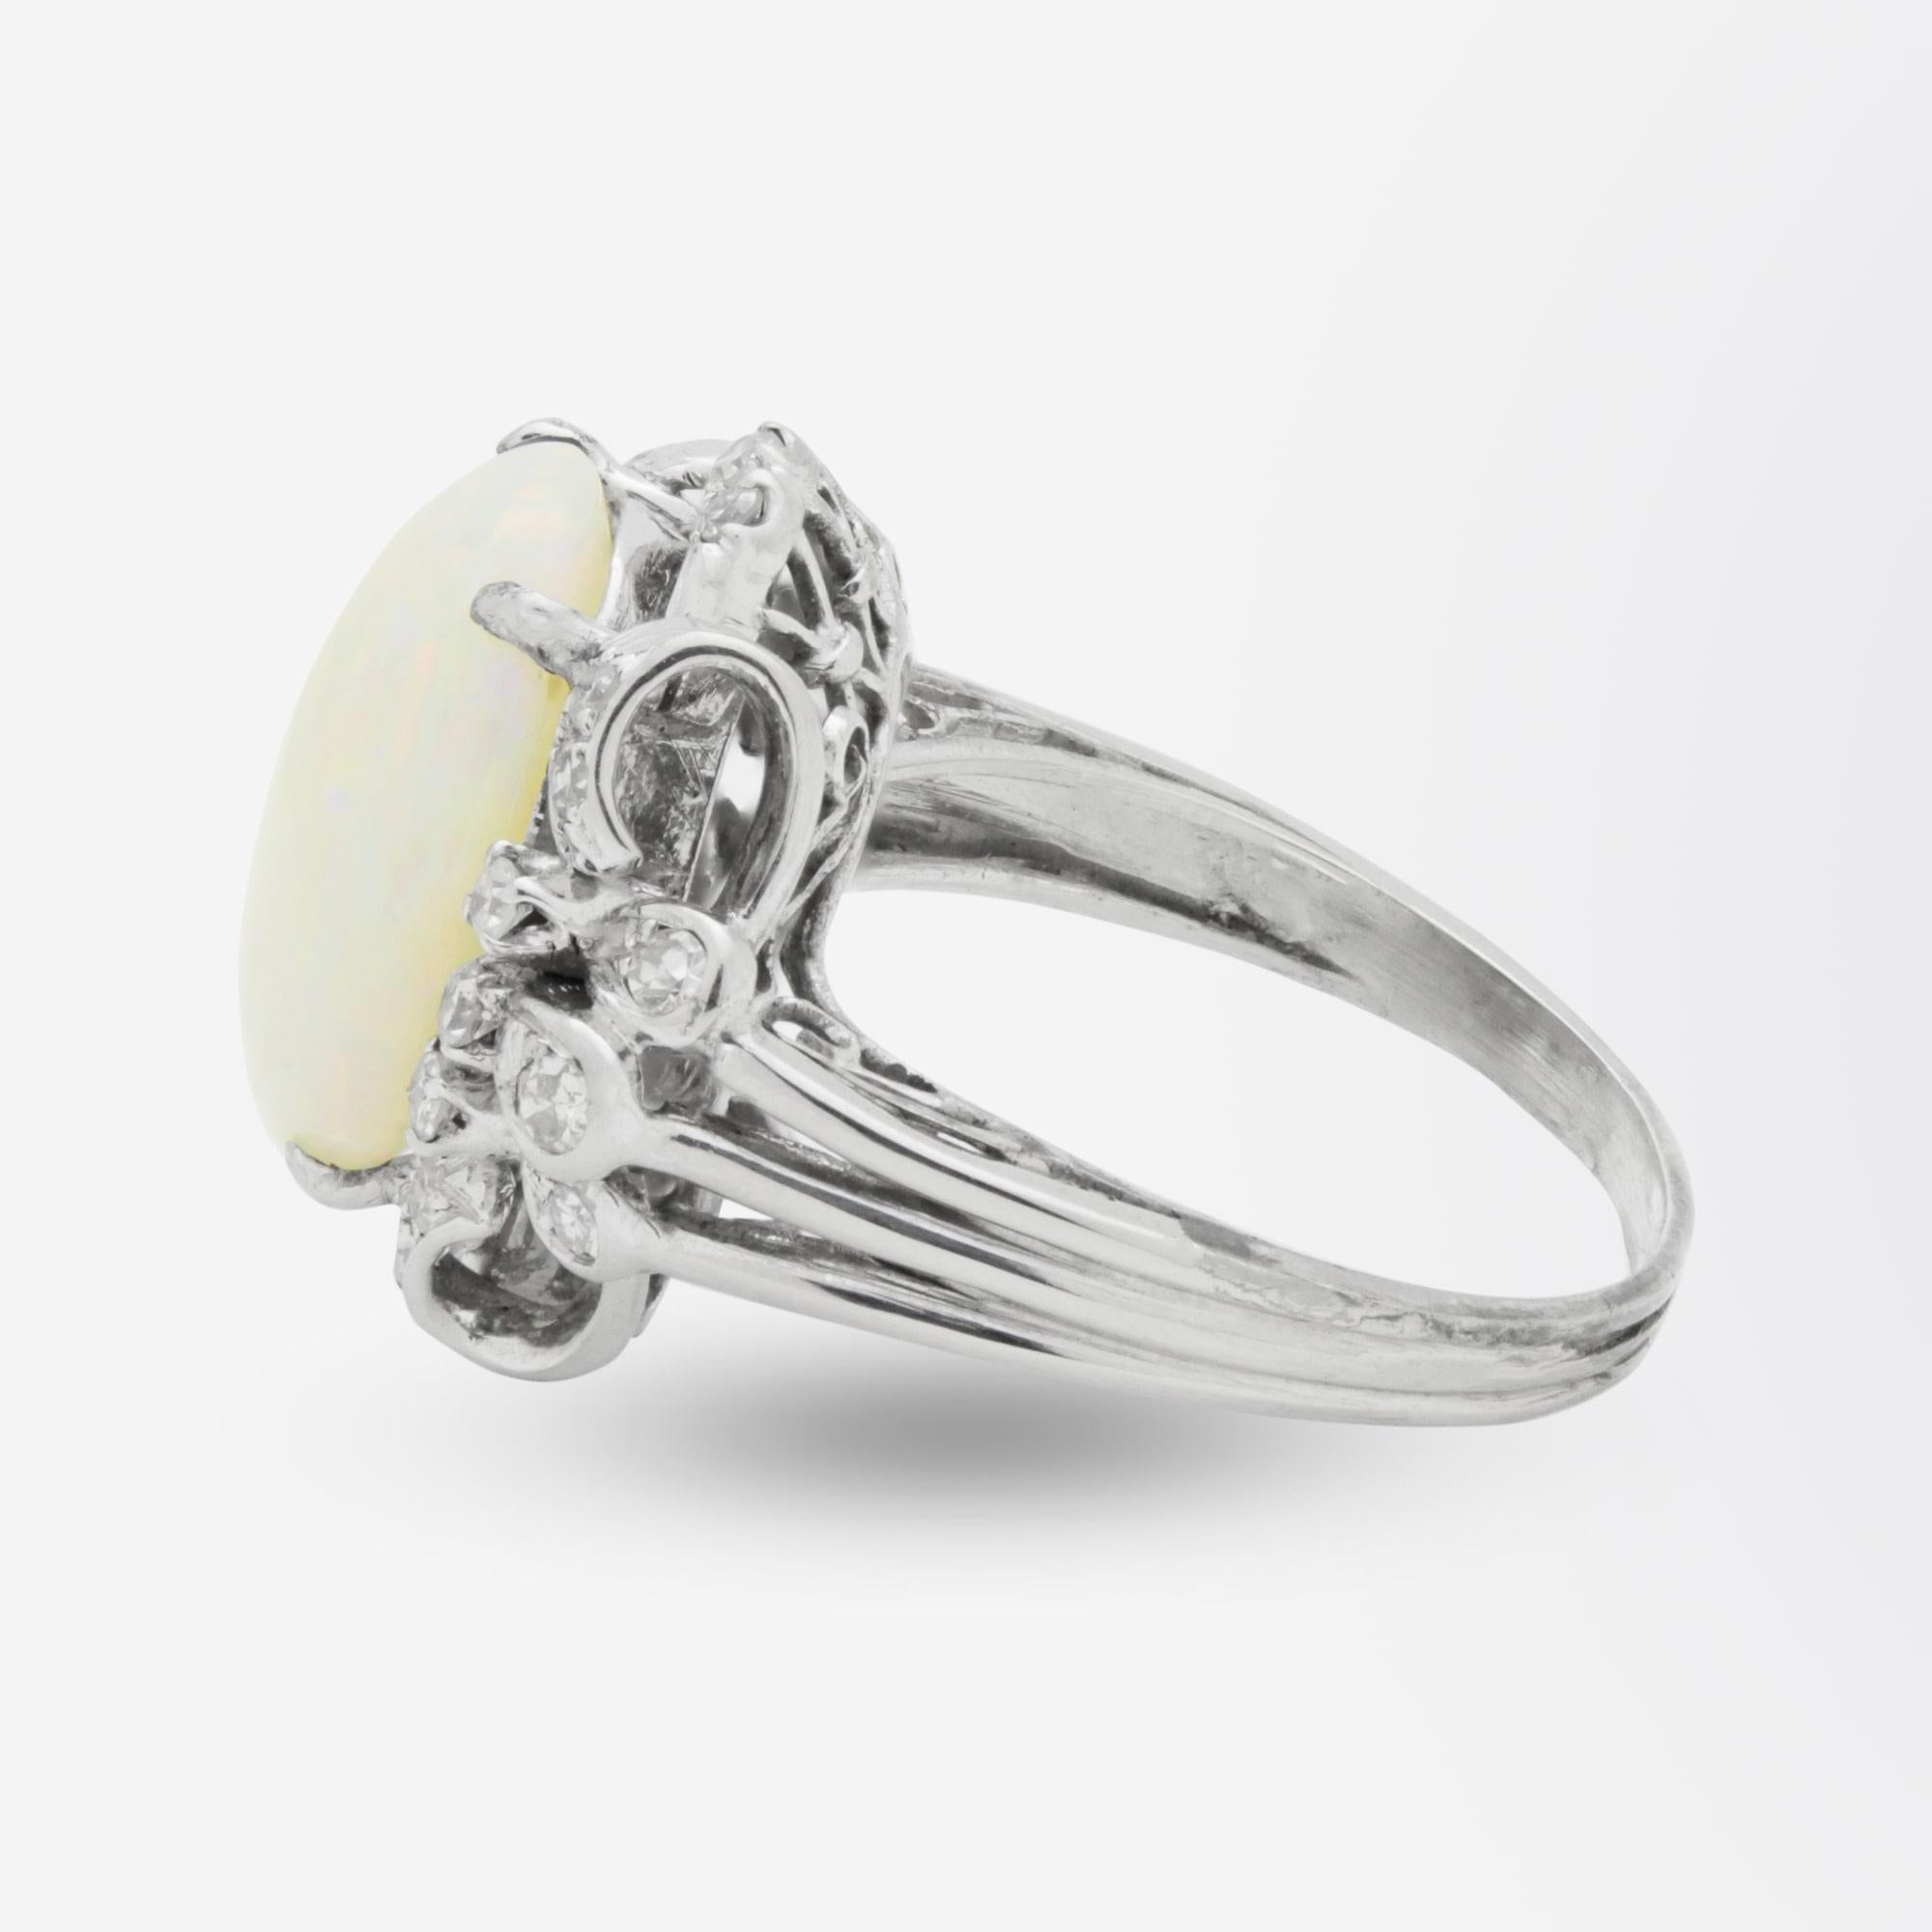 Art Deco 1940s Era, 18 Karat White Gold, Cabochon Opal, and Diamond Ring